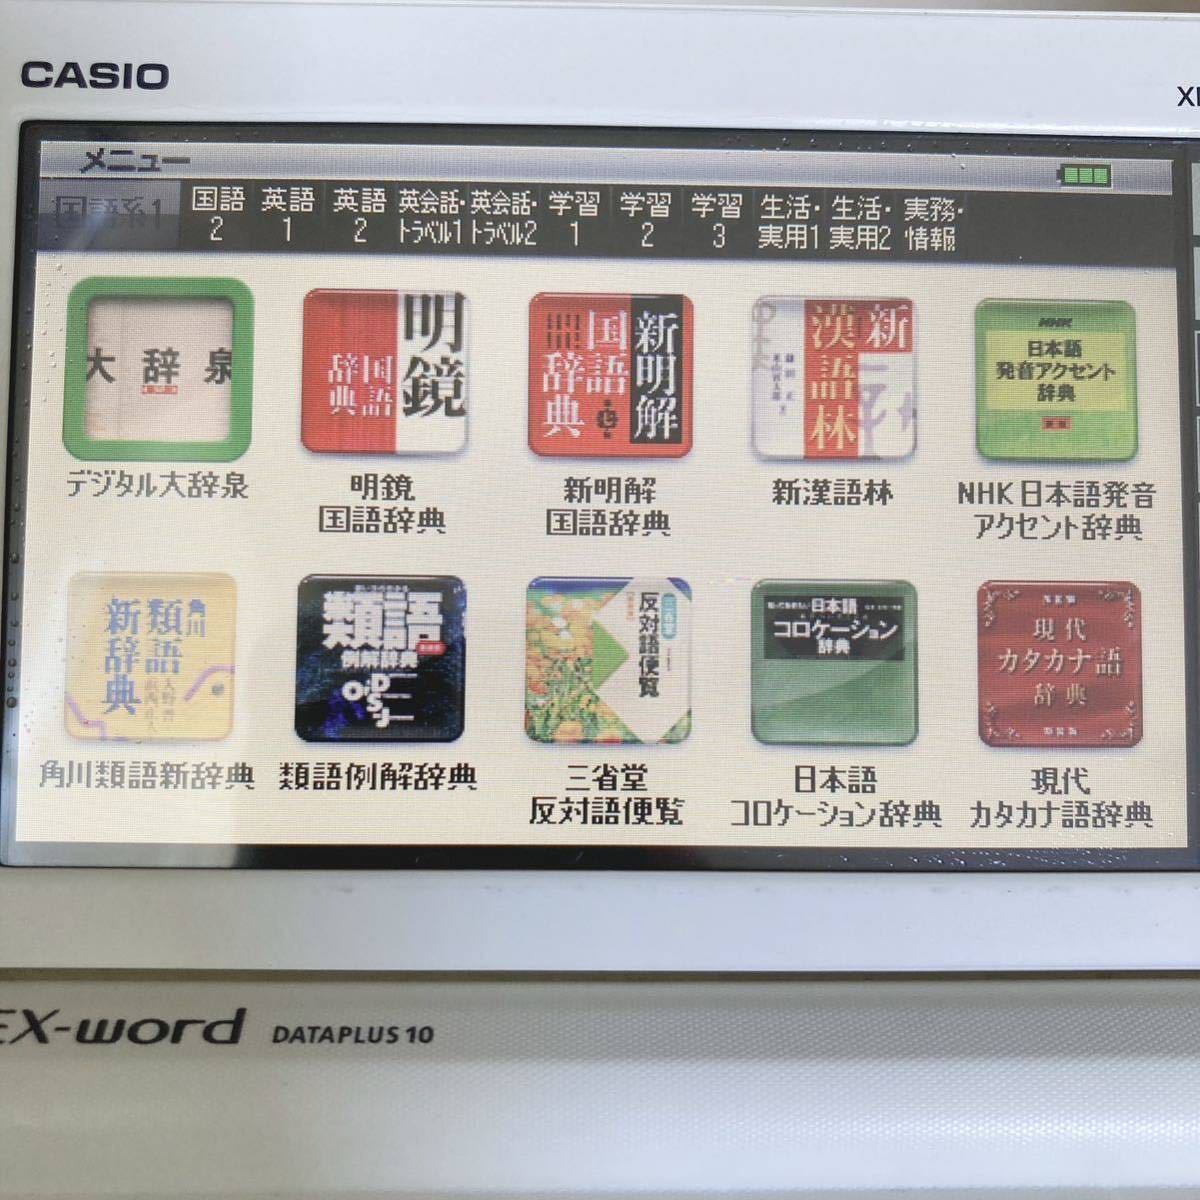  computerized dictionary Θ high grade English model korean language morning . language dictionary day . dictionary XD-G9800 XS-SH18MC ΘH73